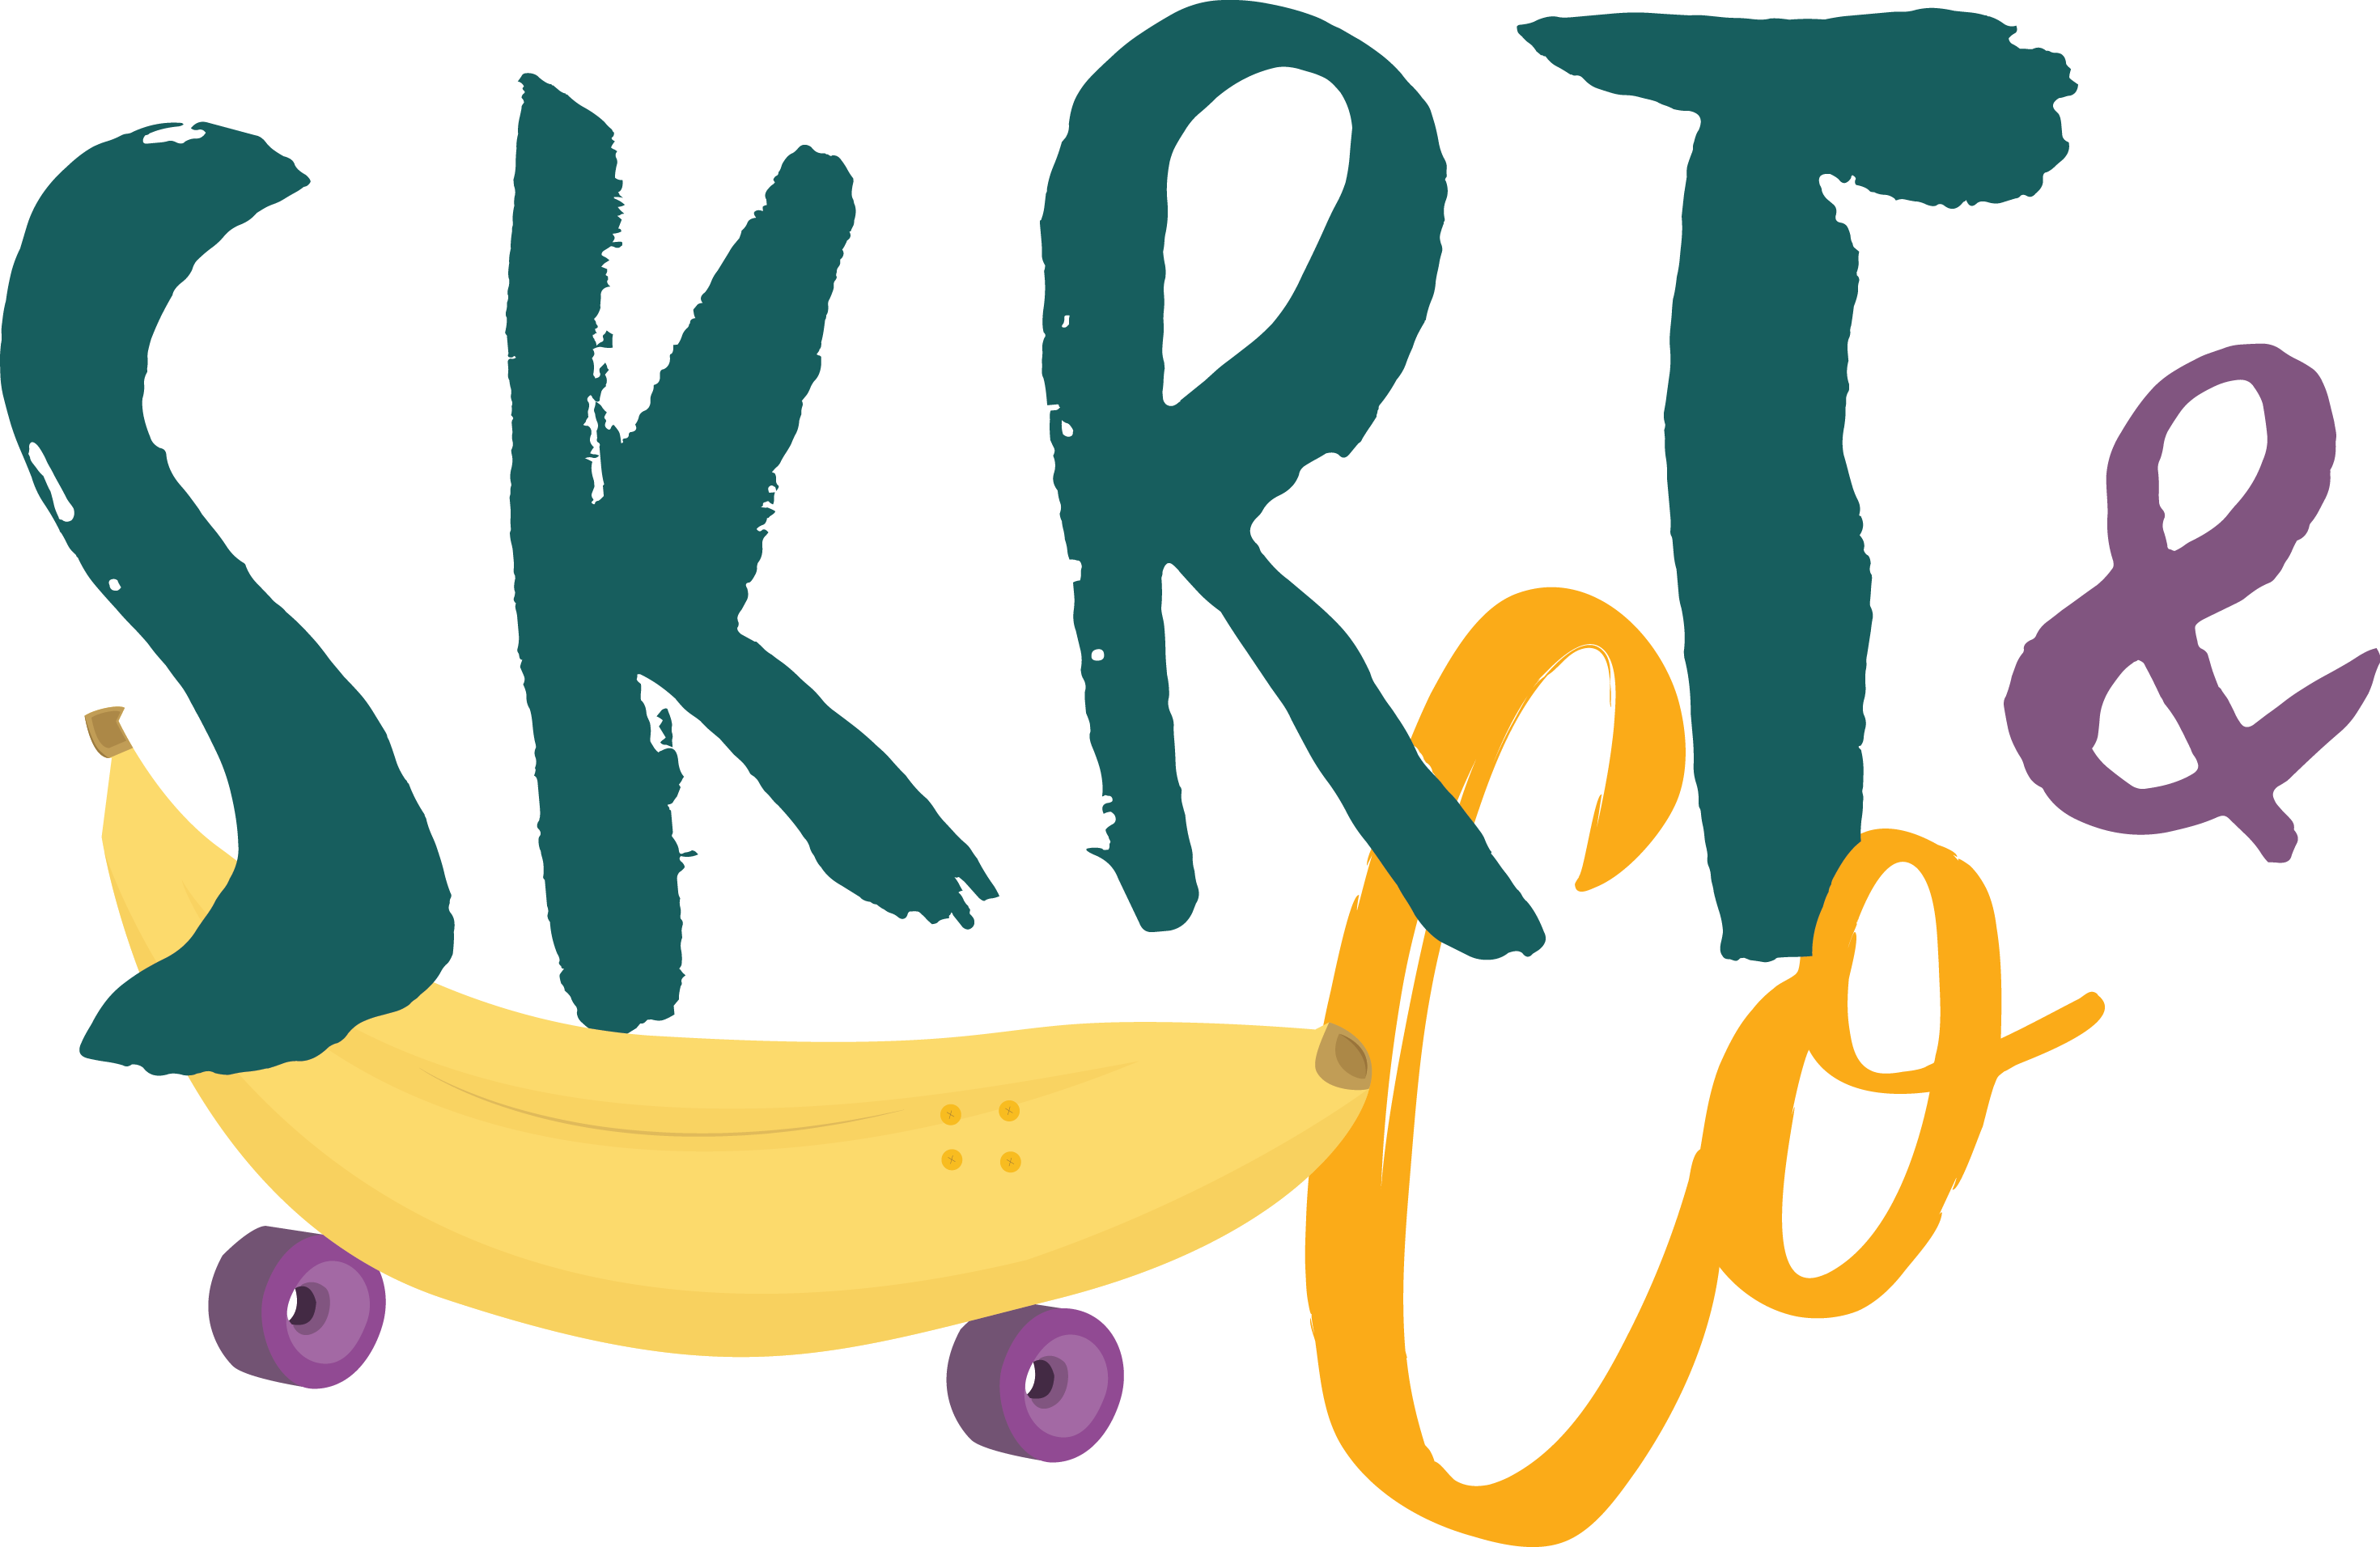 Logo for a sock company pronounced 